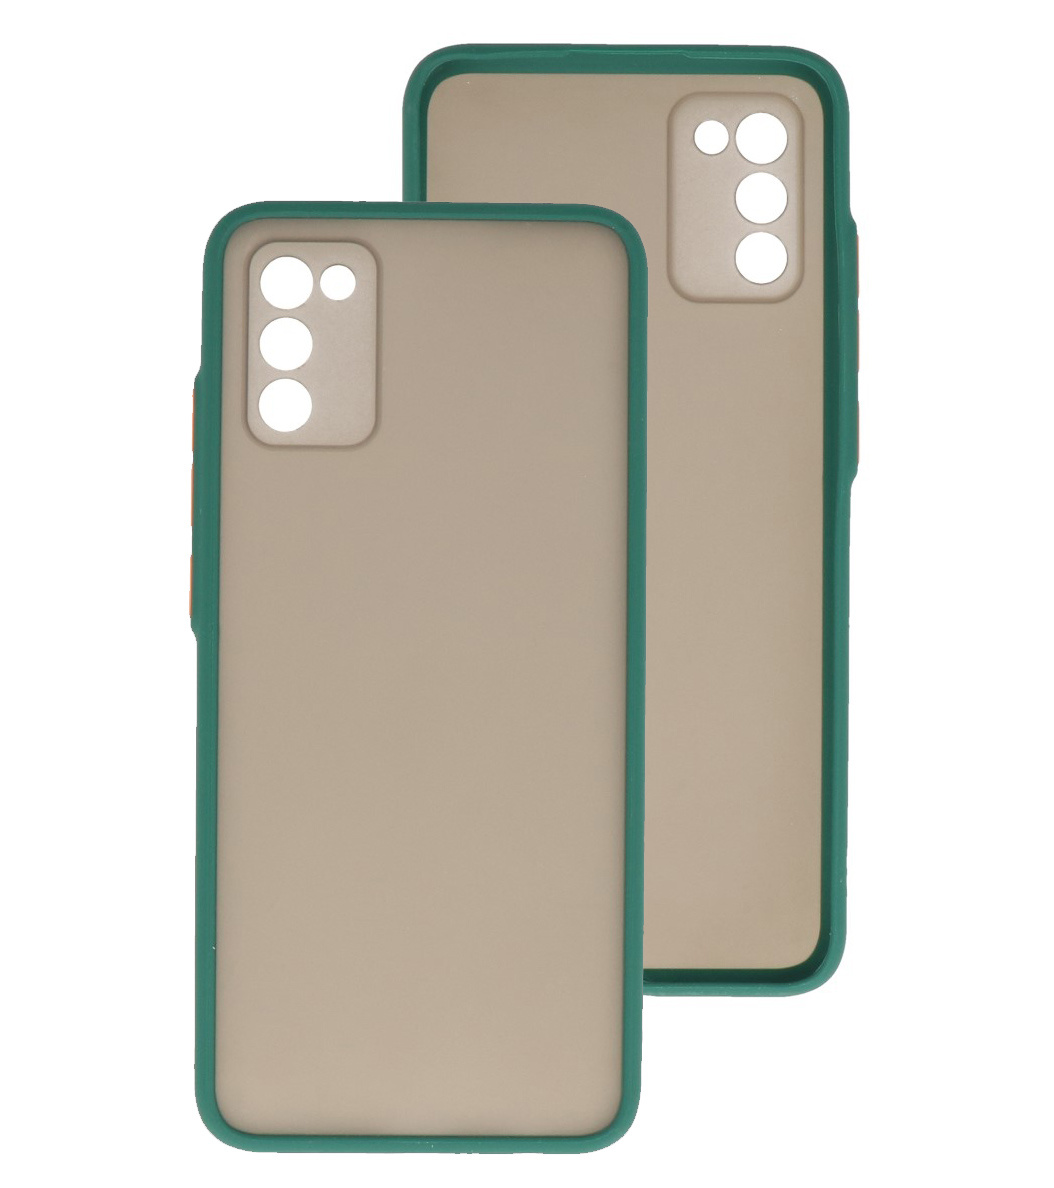 Farbkombination Hardcase für Samsung Galaxy A02s Dunkelgrün